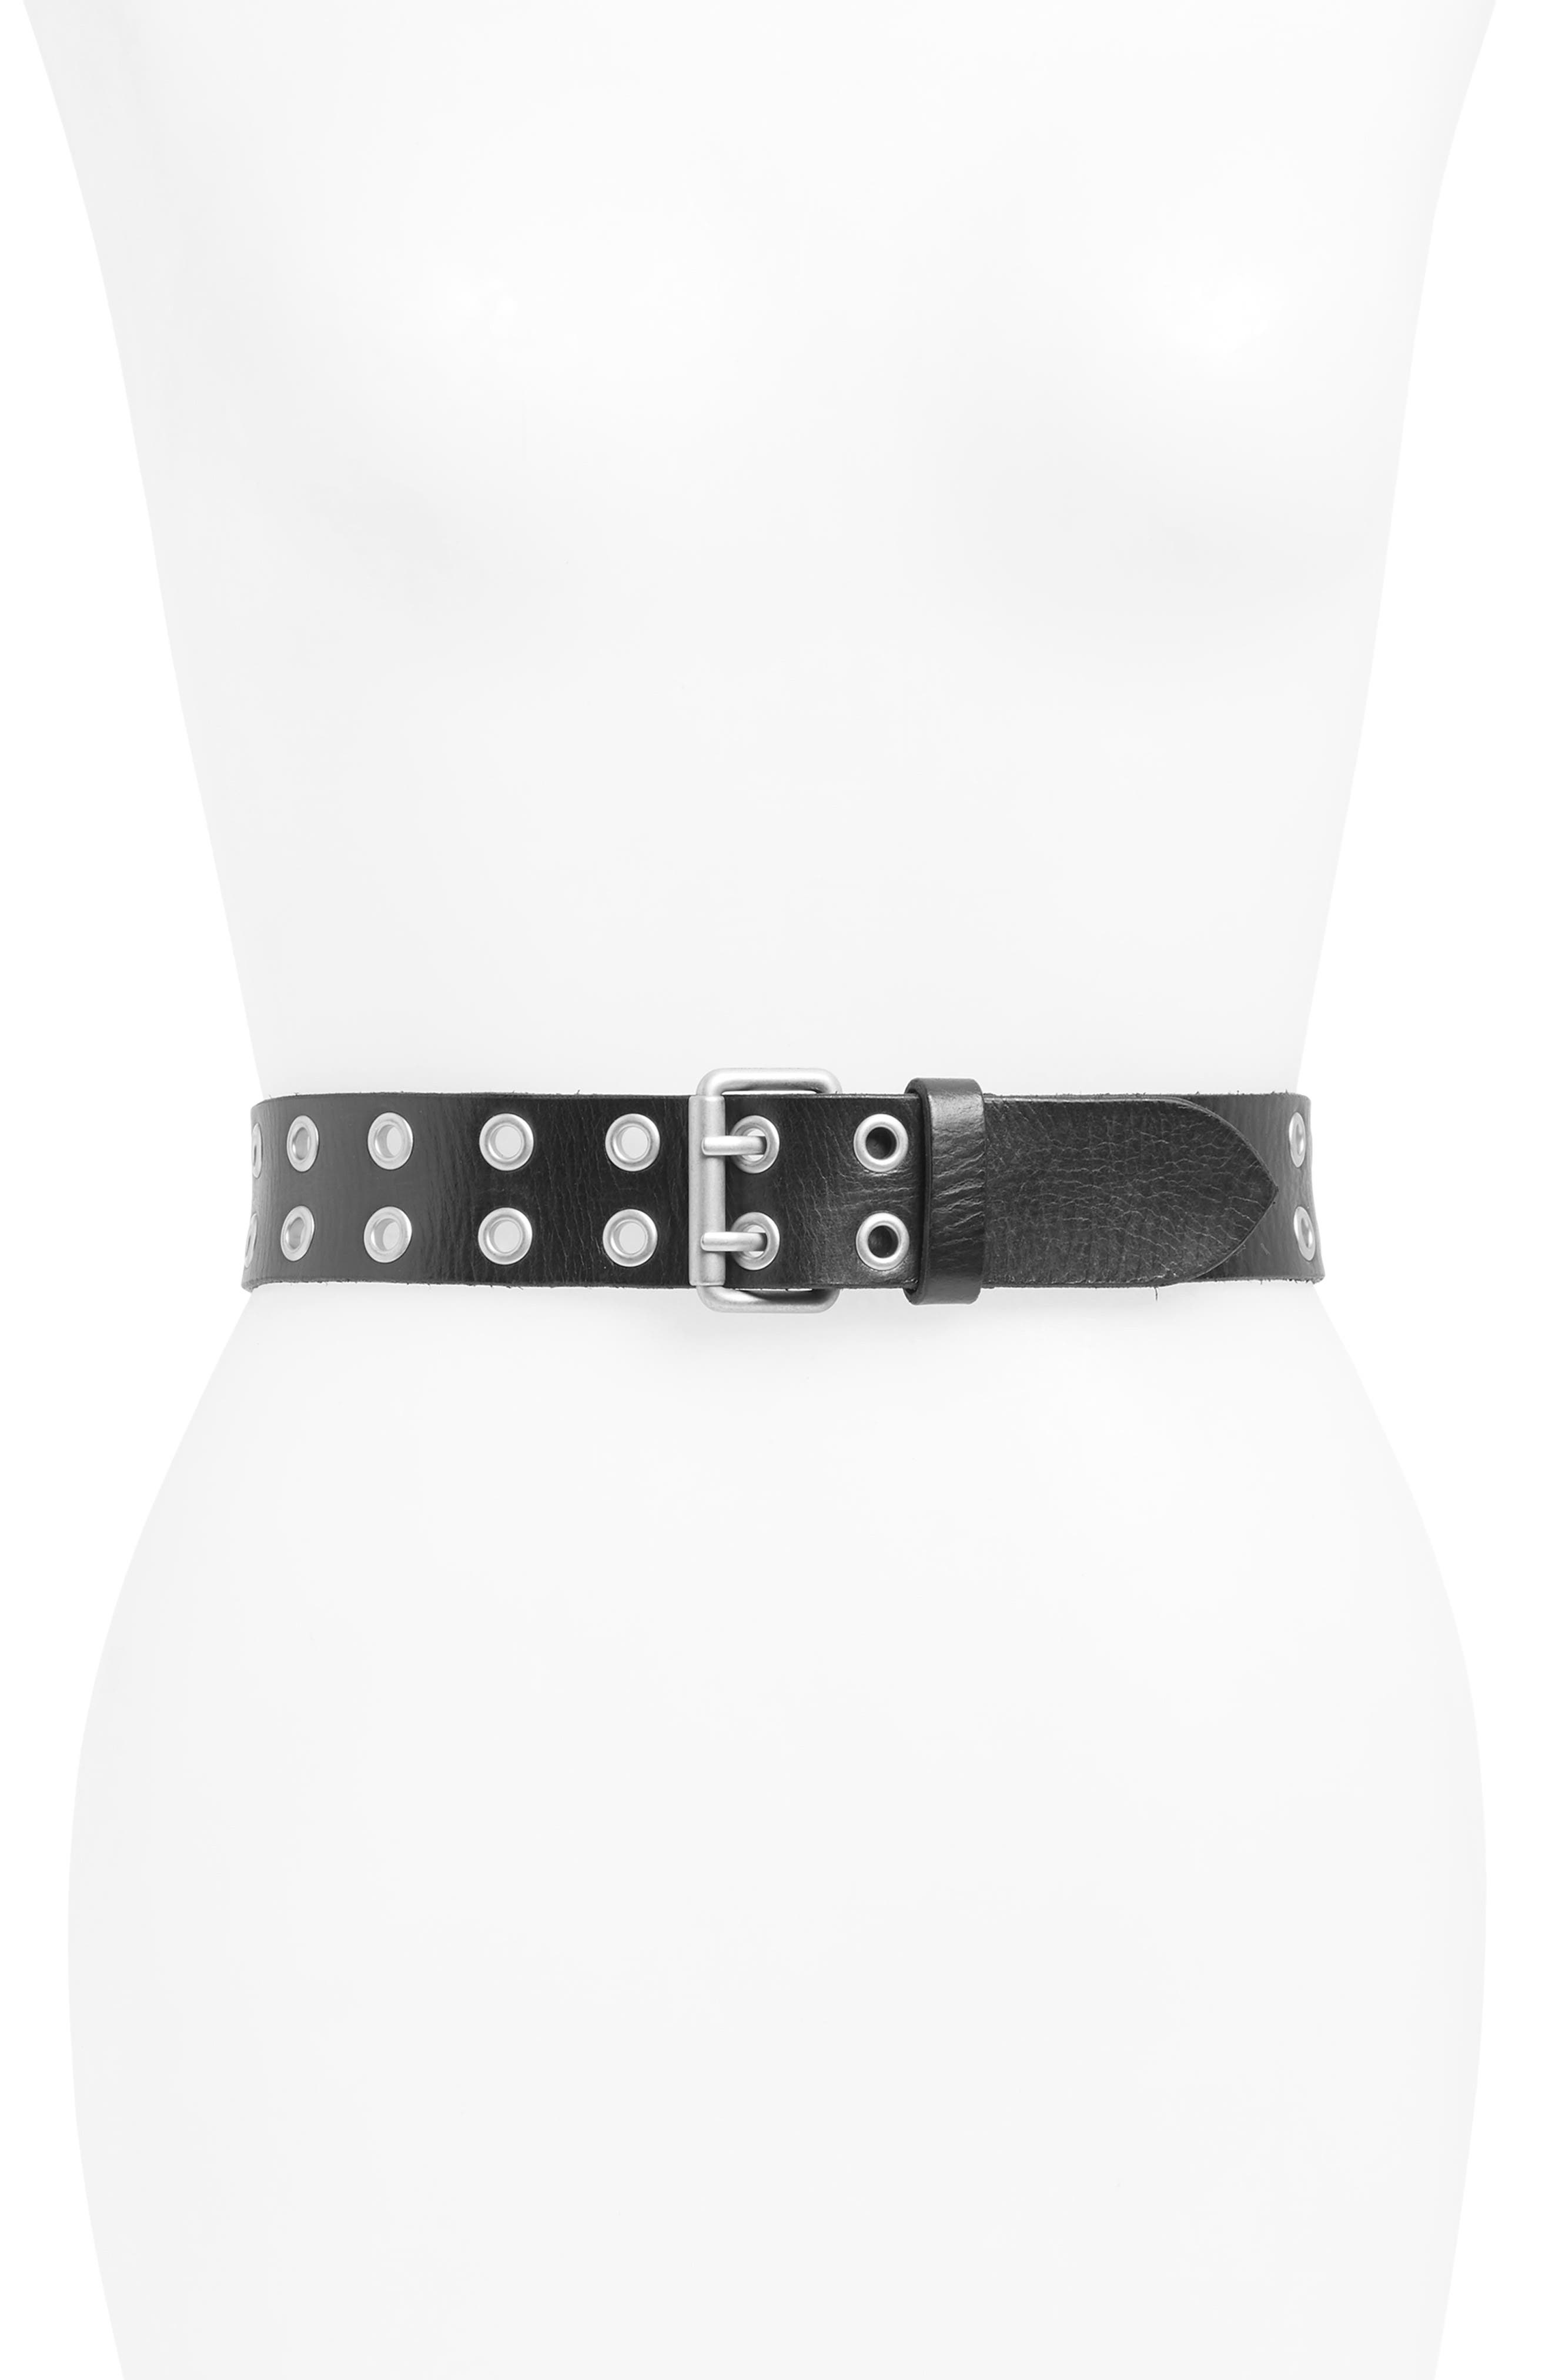 Double Grommet PU Leather Belt for Women Punk Style Jeans Belt with Detachable Chain